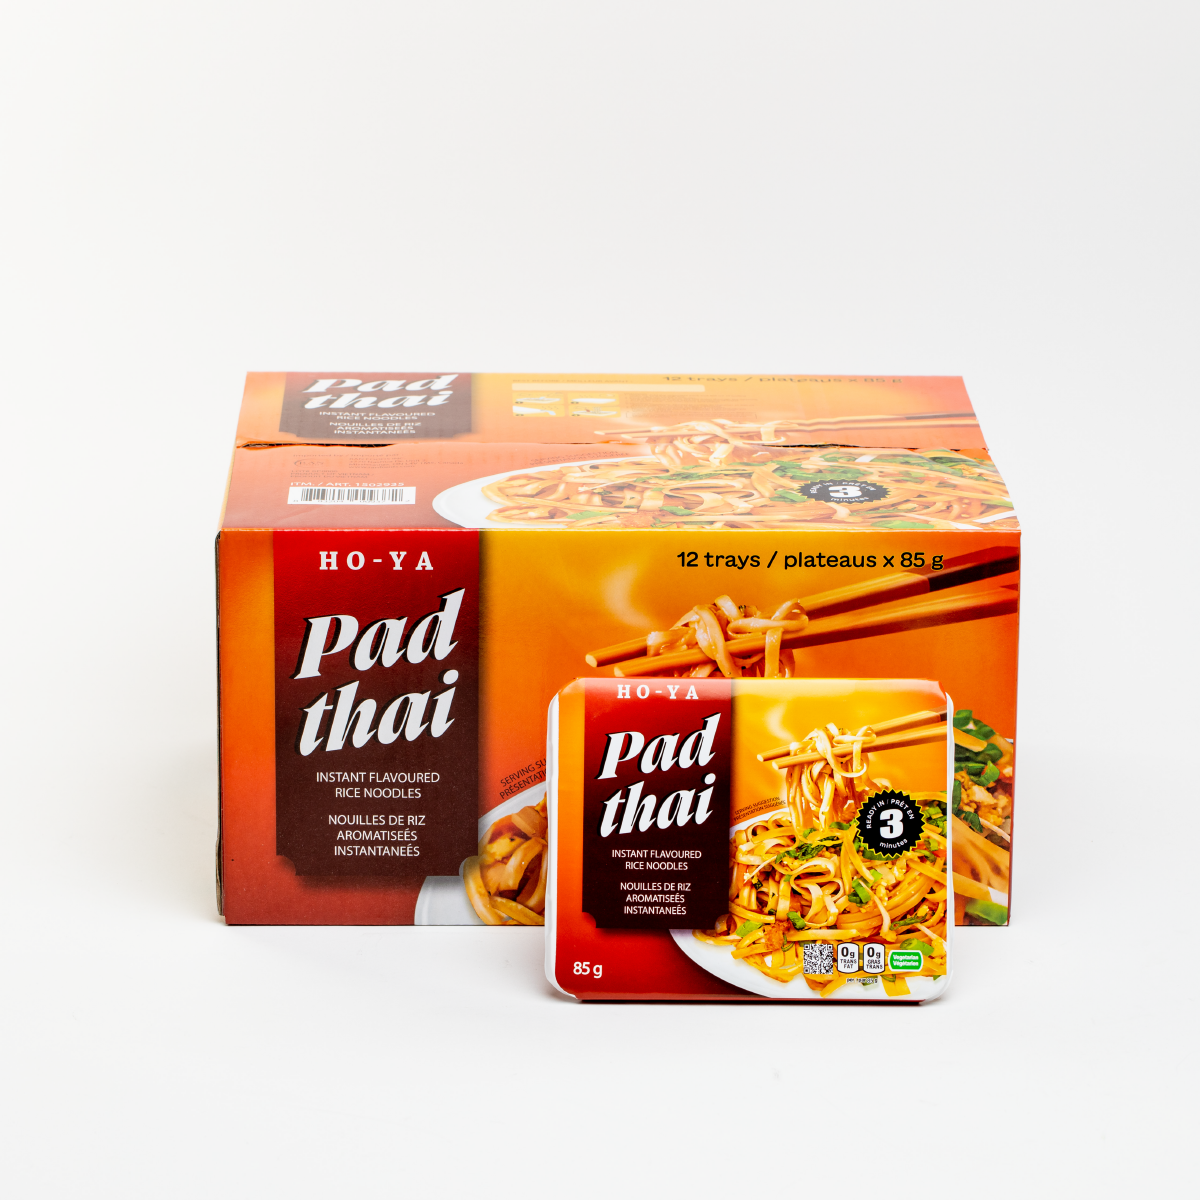 Pad thai - Ho-ya - 80 g